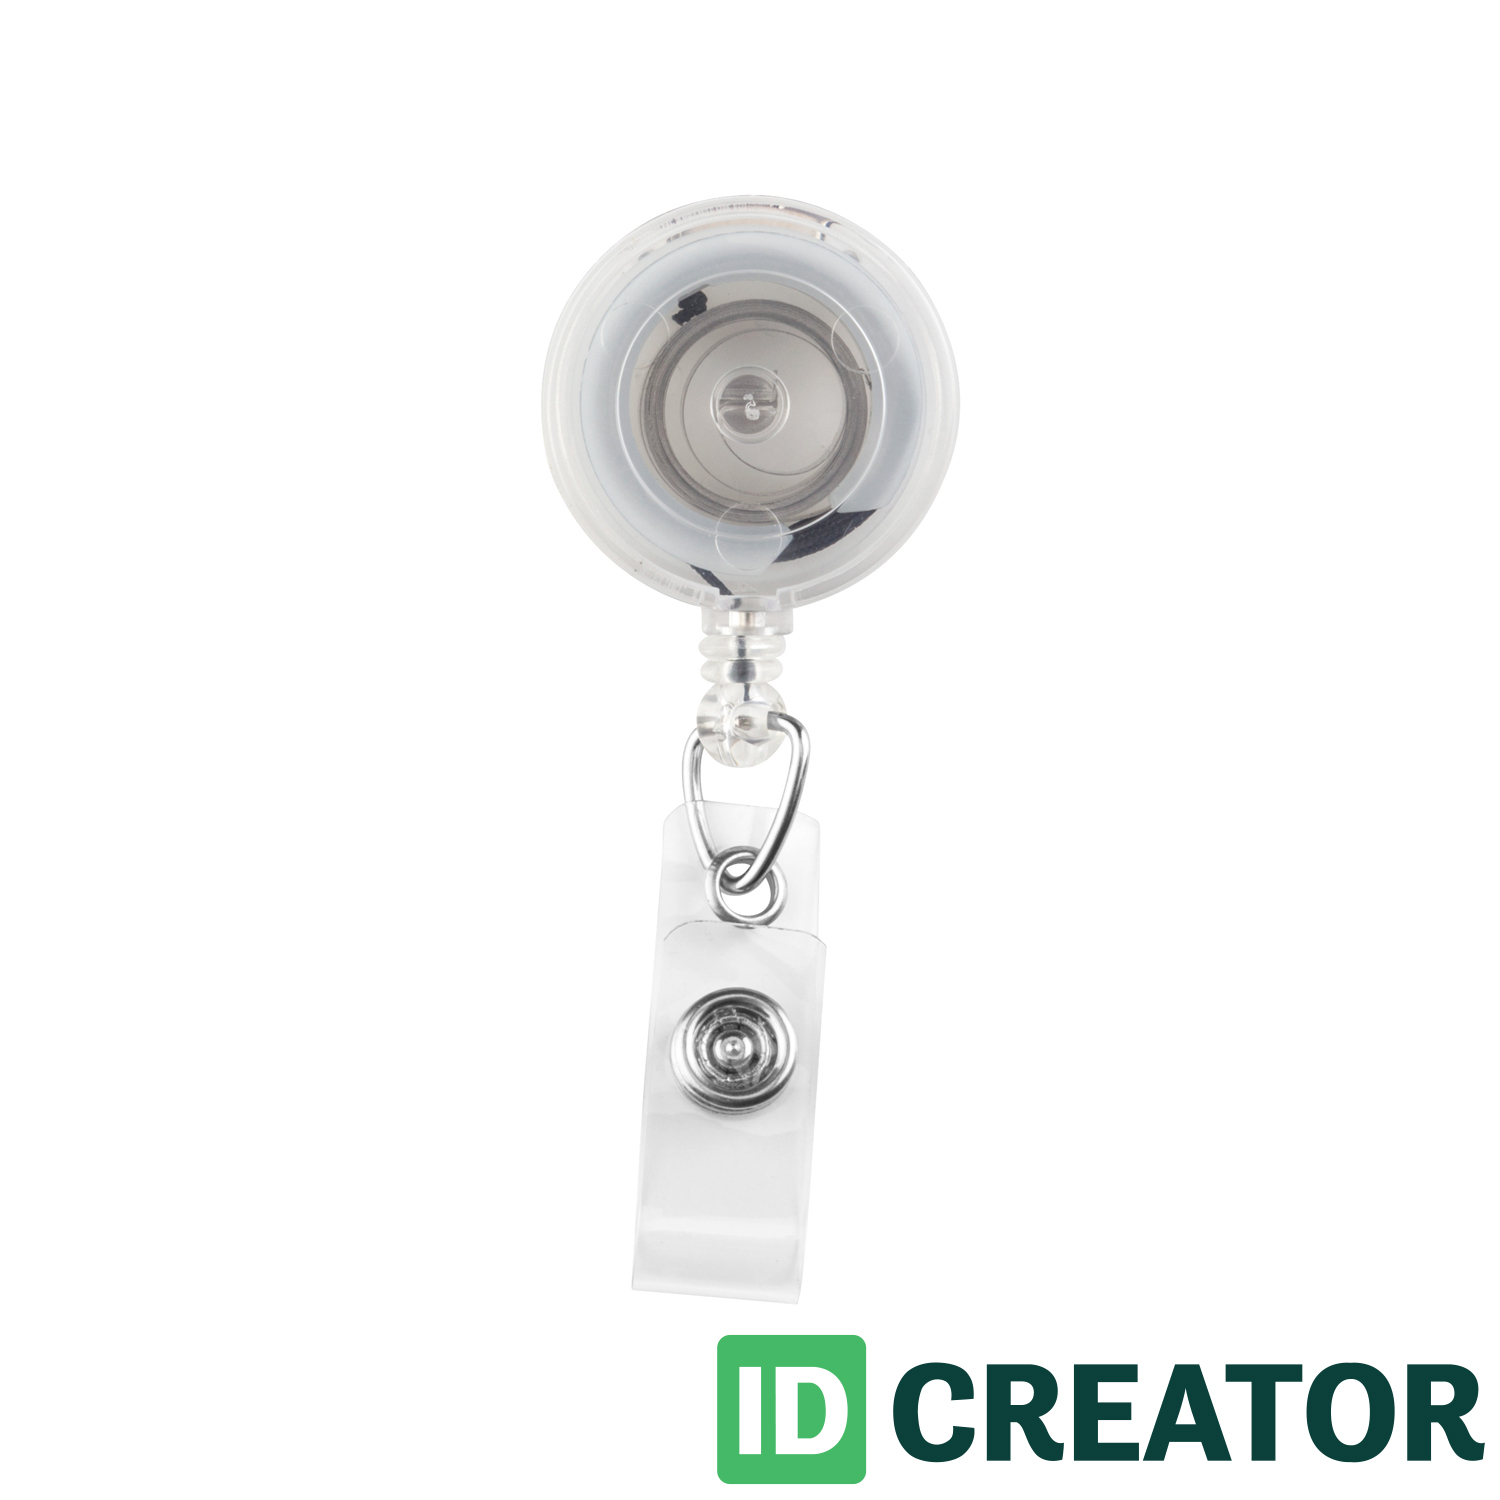 idcreator-id-badge-maker-free-id-card-software-1-855-make-ids